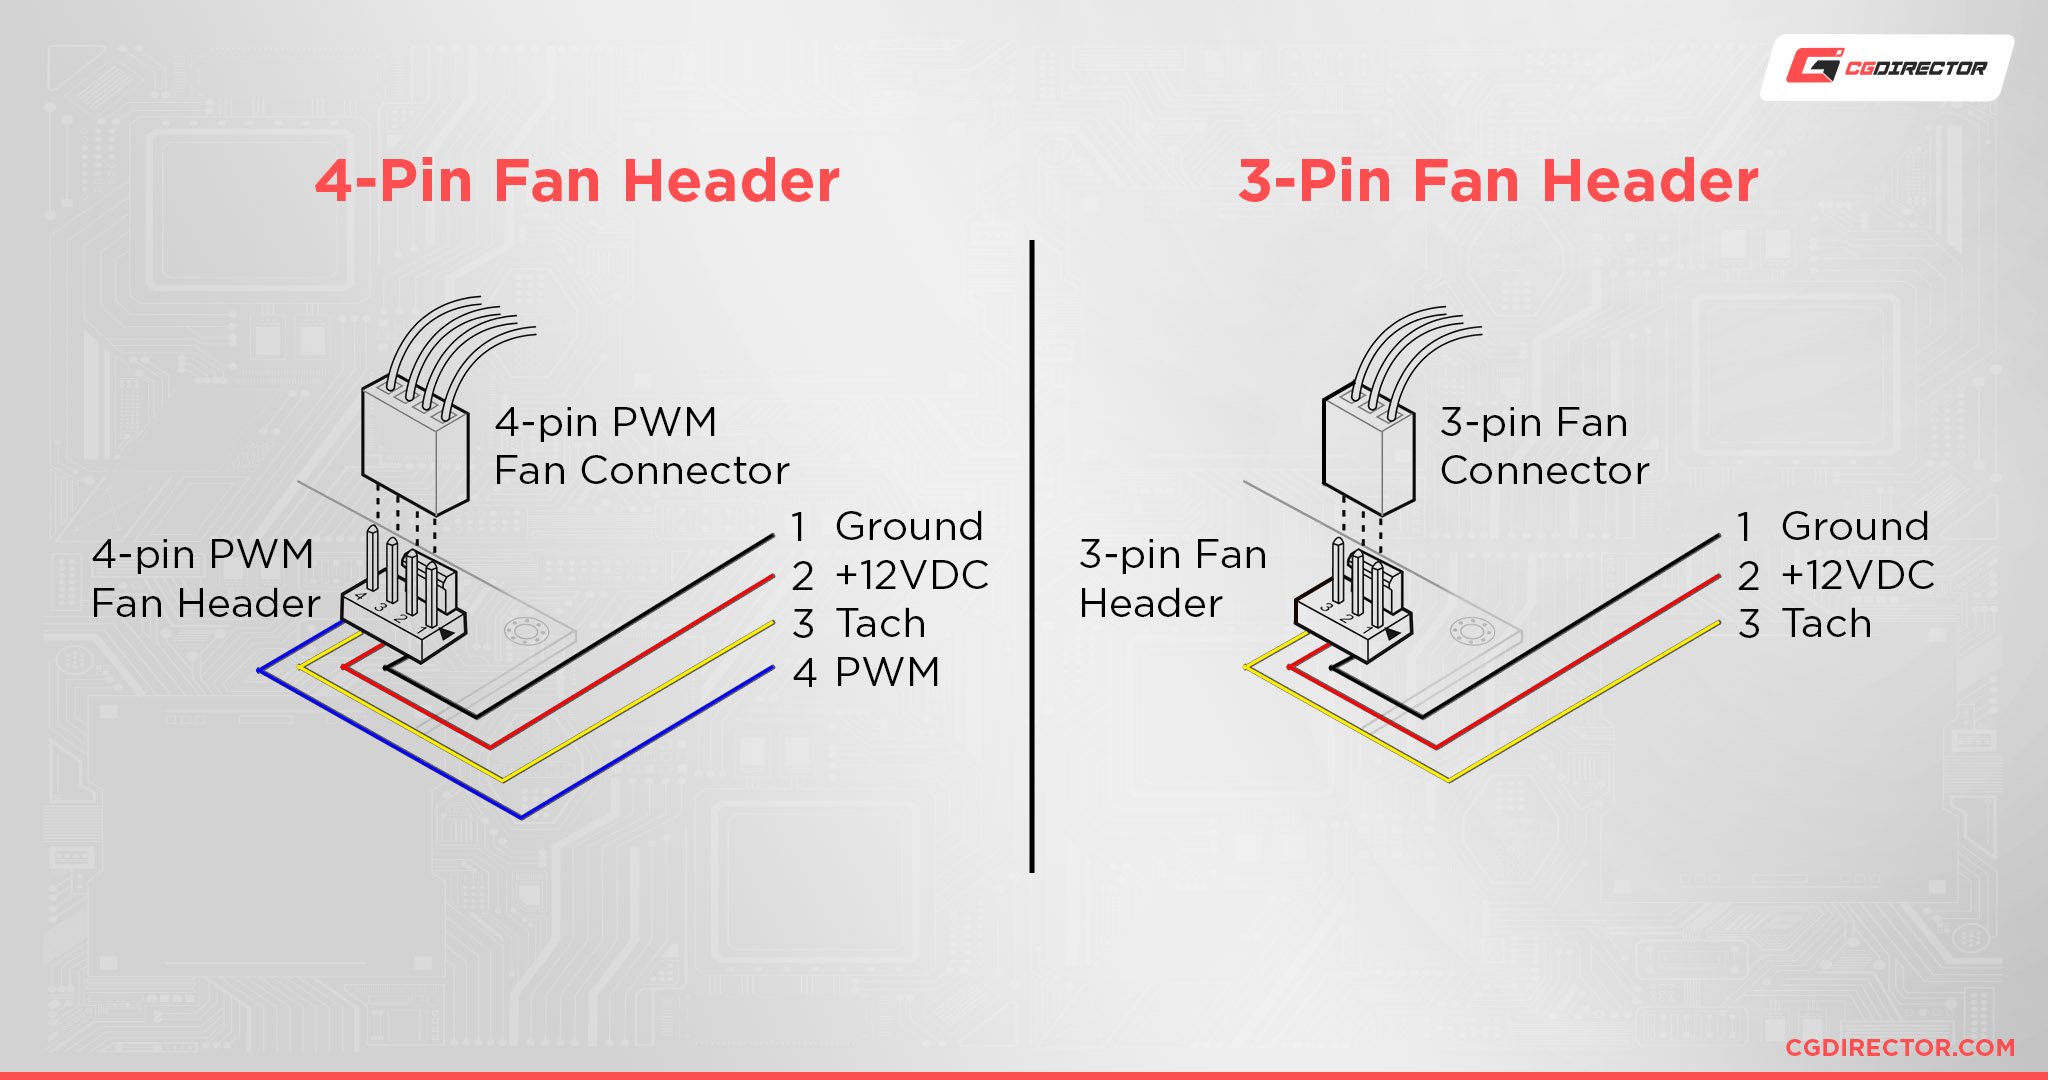 3-pin vs 4-Pin Fan Headers